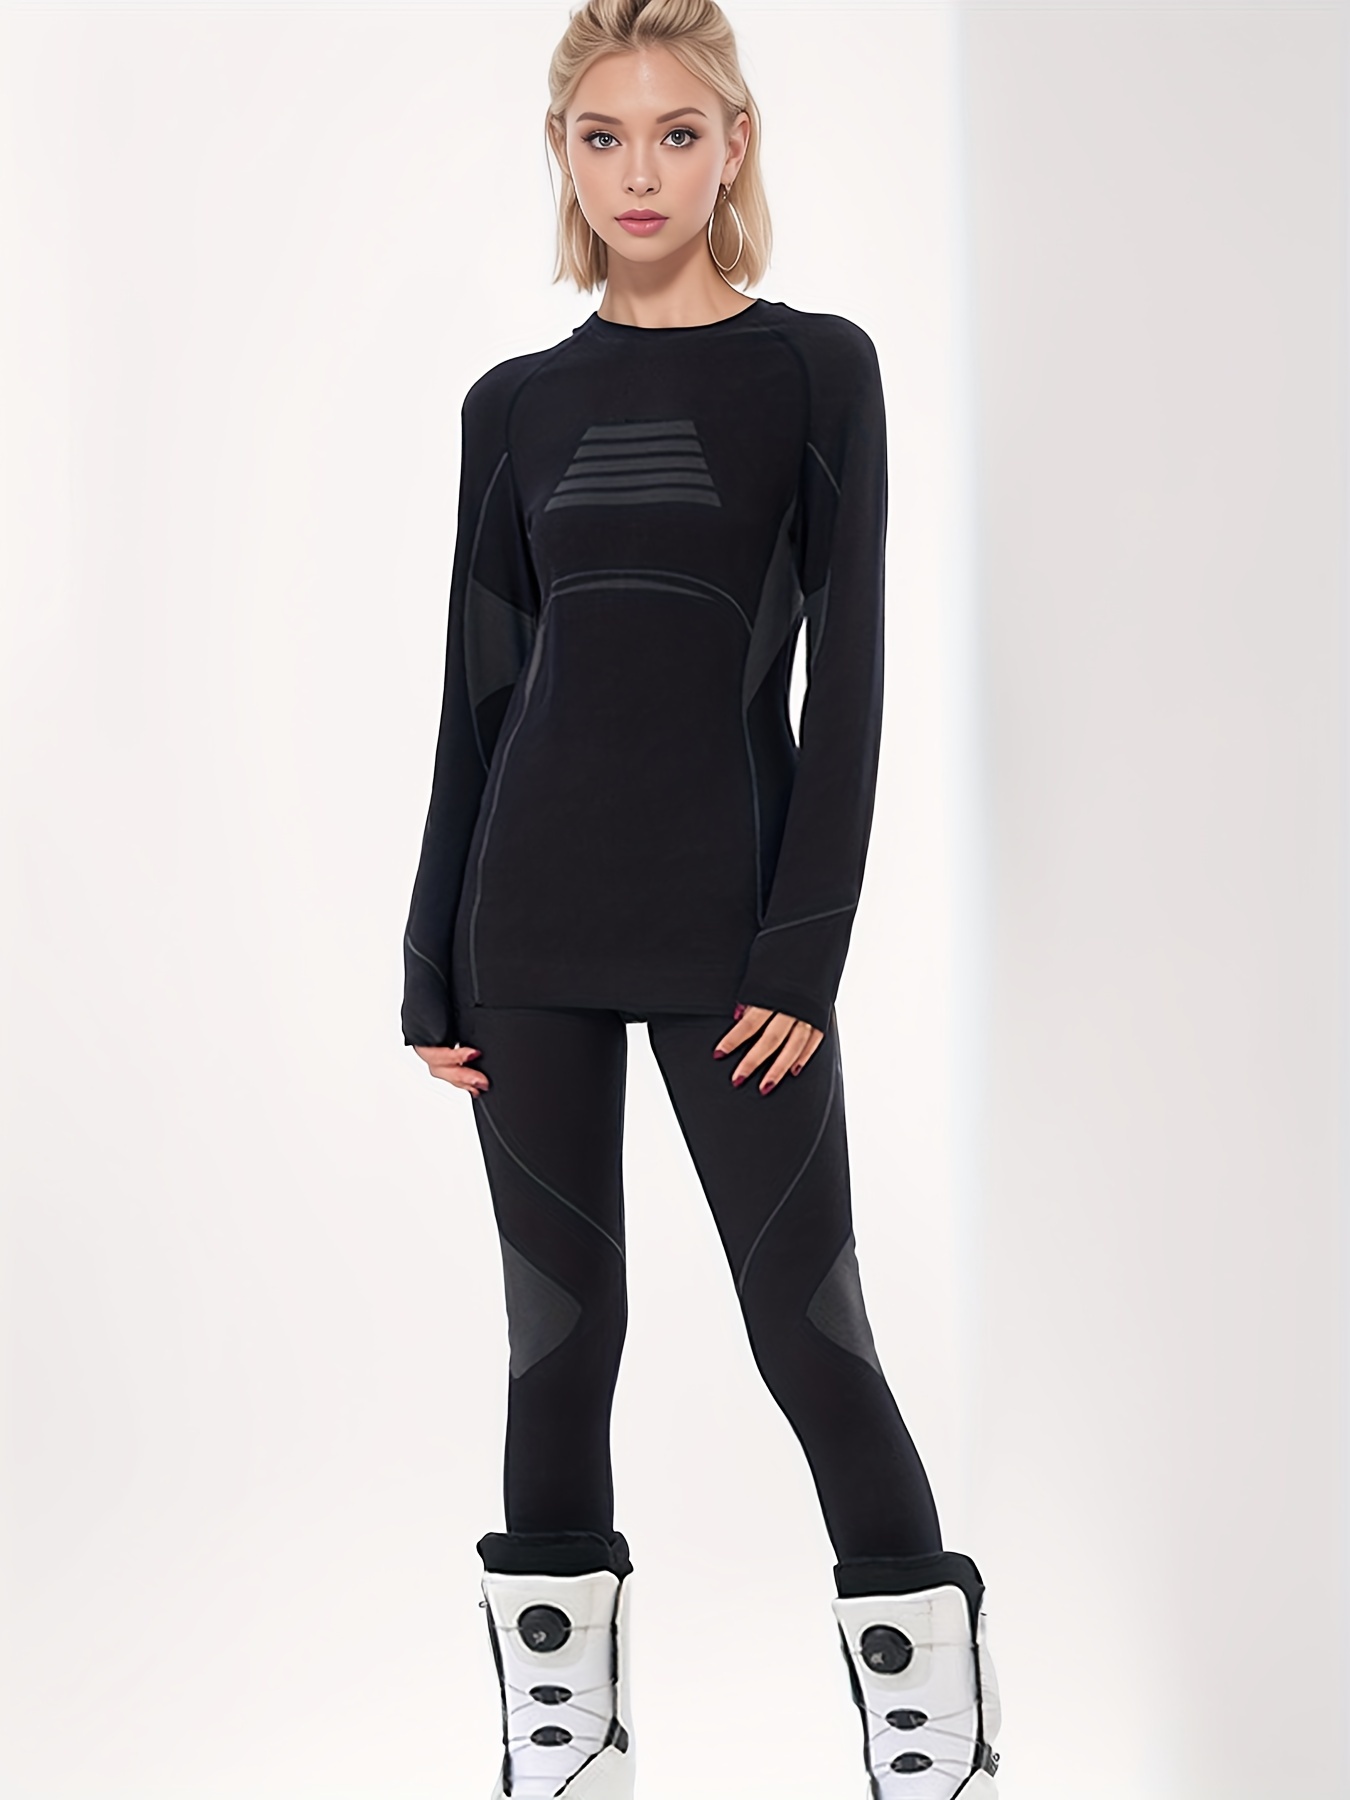 2pcs Thermal Set, Long Sleeve Warm Ski Cycling Base Layer Top & Leggings  Suit, Women's Activewear